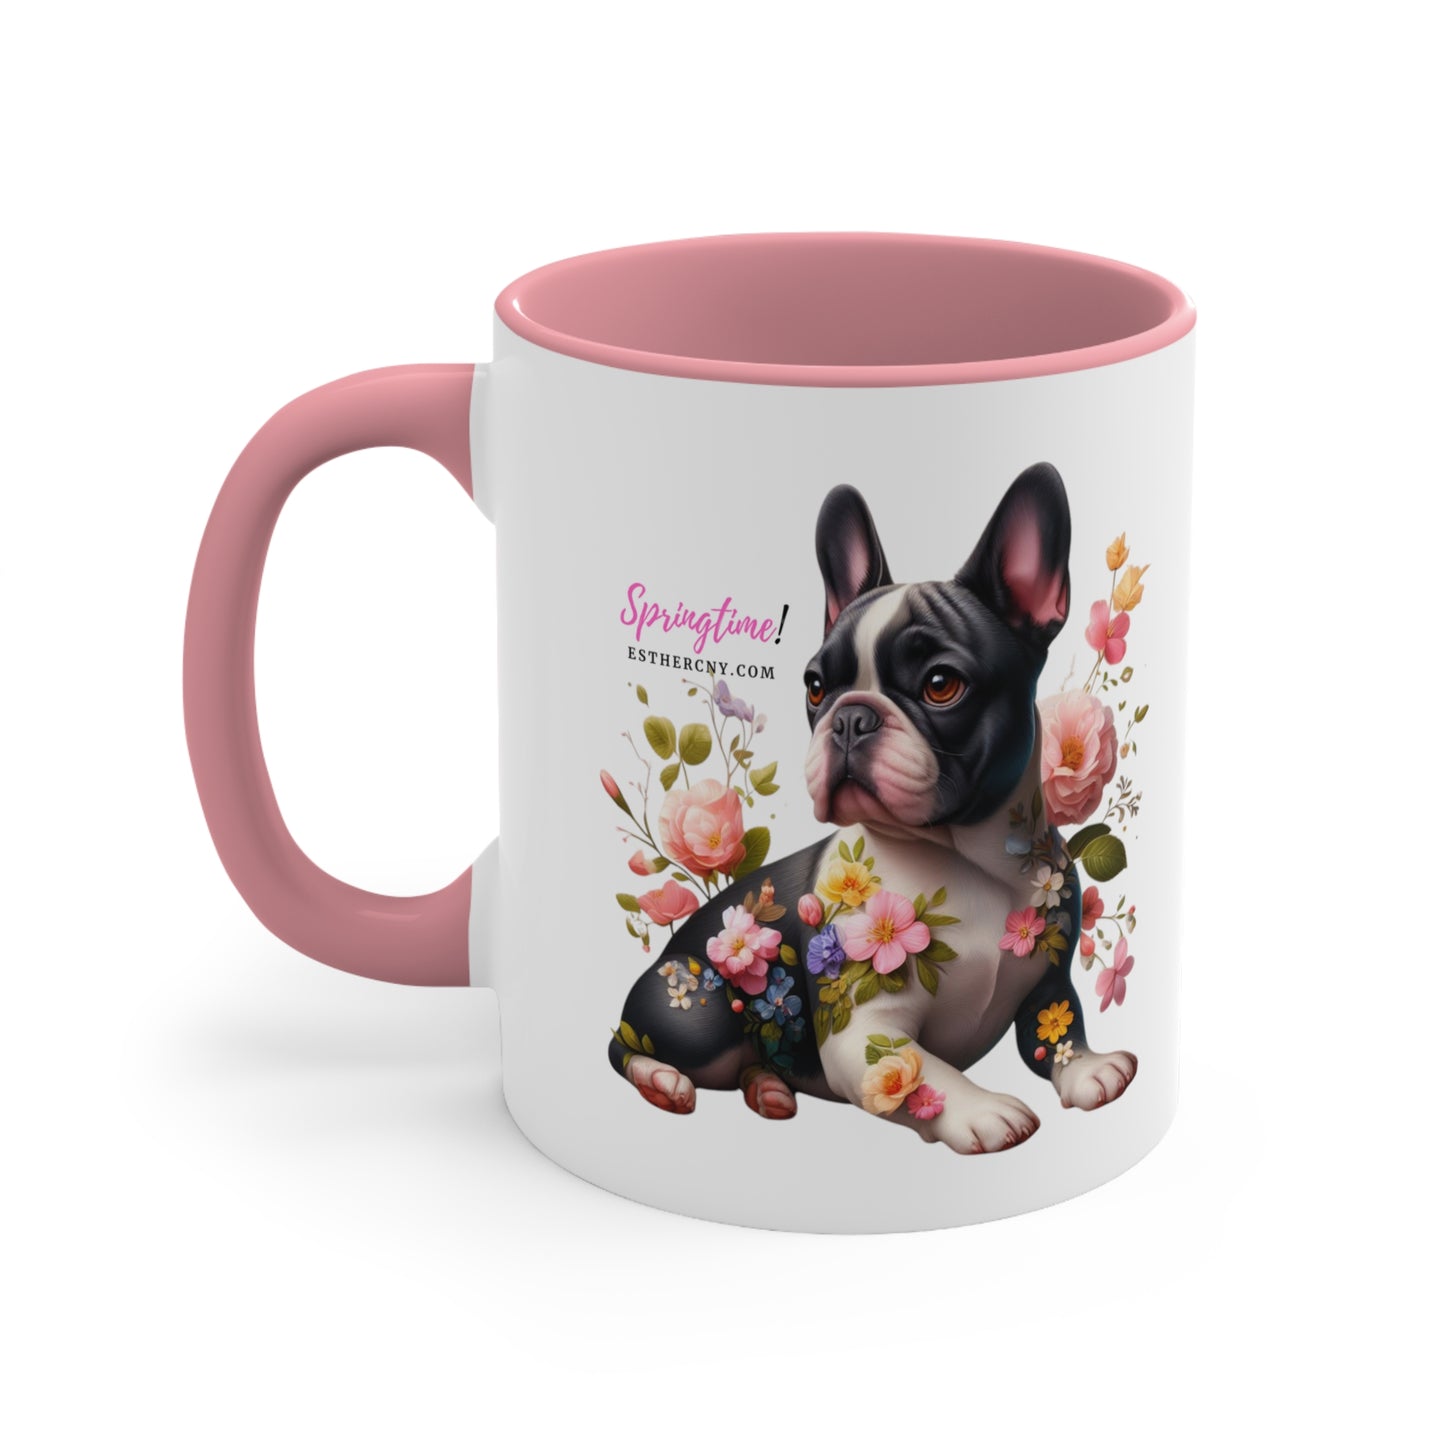 Springtime black & white French Bulldog Accent Coffee Mug, 11oz